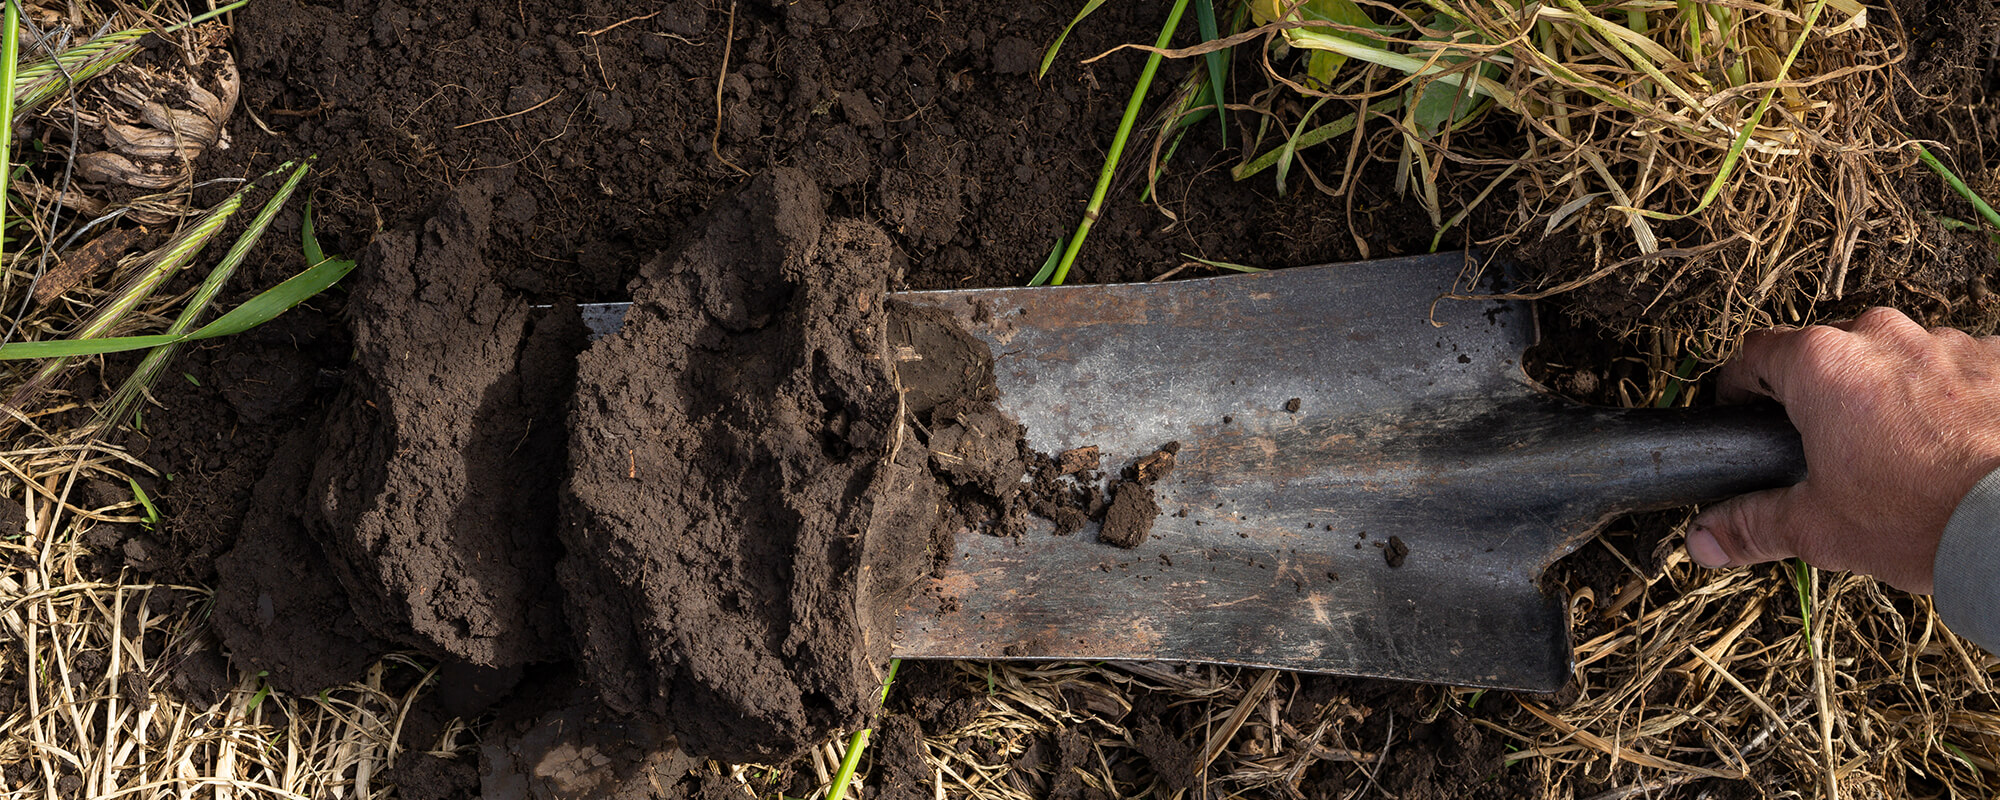 Shovel挖掘土壤